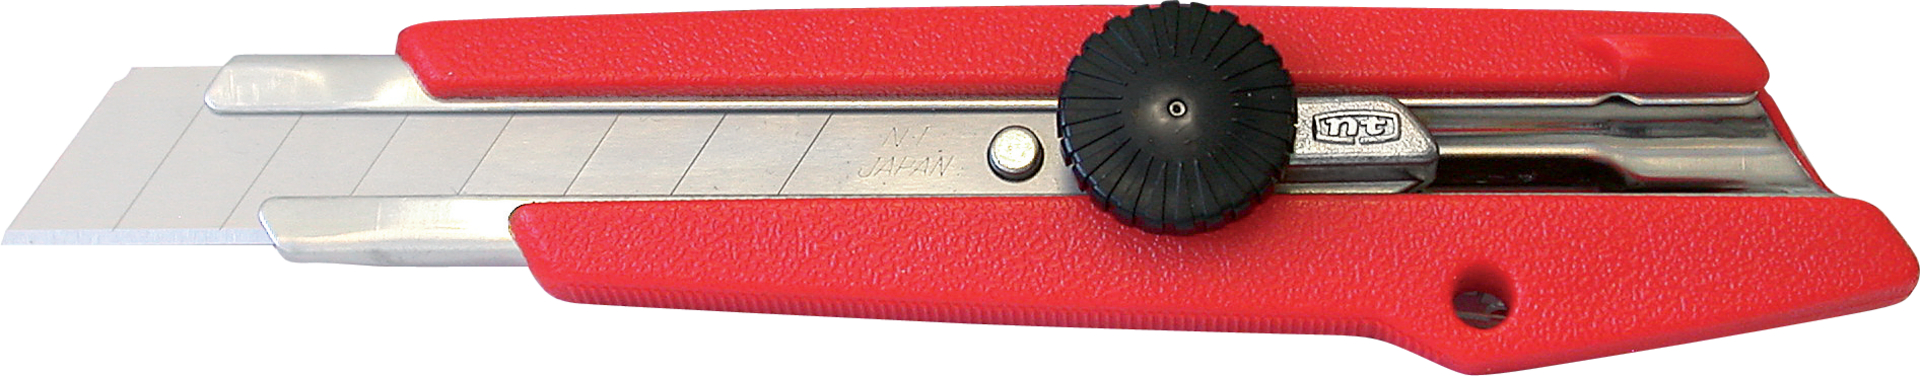 FORMAT Cuttermesser m.Rädchen 18mm, Kunstoffgehäuse, 3 Abbrechklingen